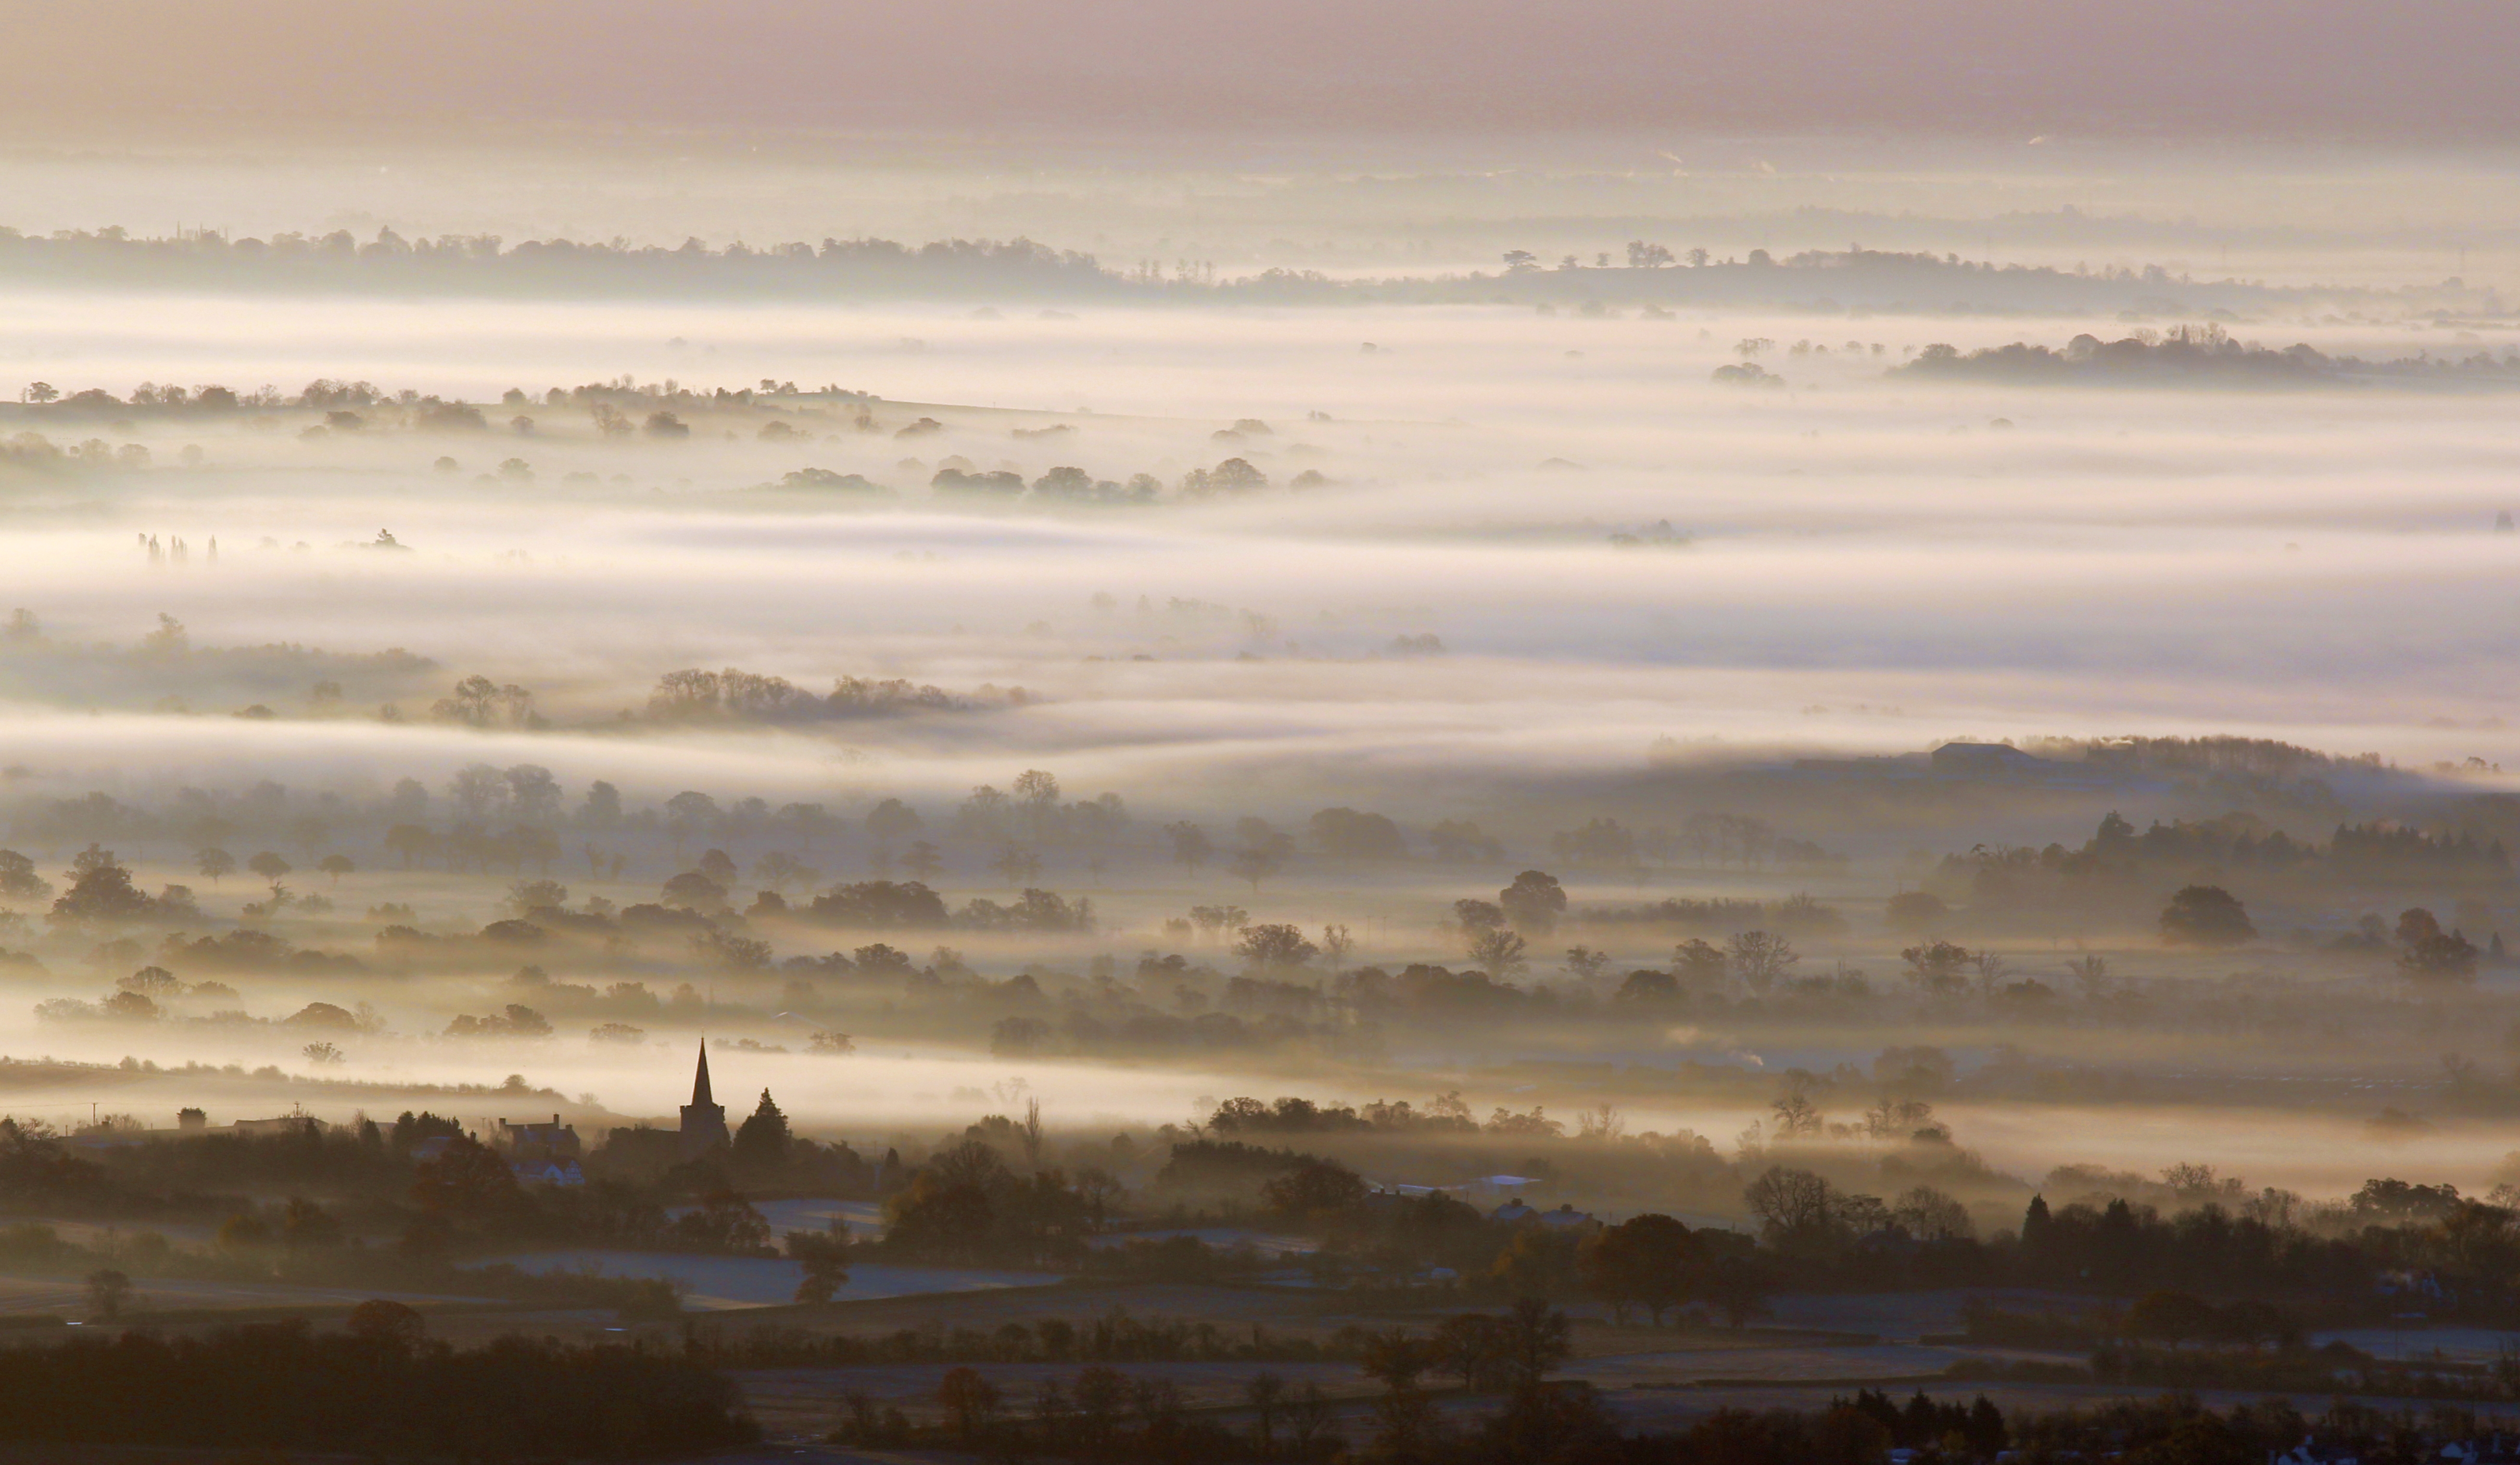 Castlemorton church with mist over Longdon Marsh, © Bob Embleton